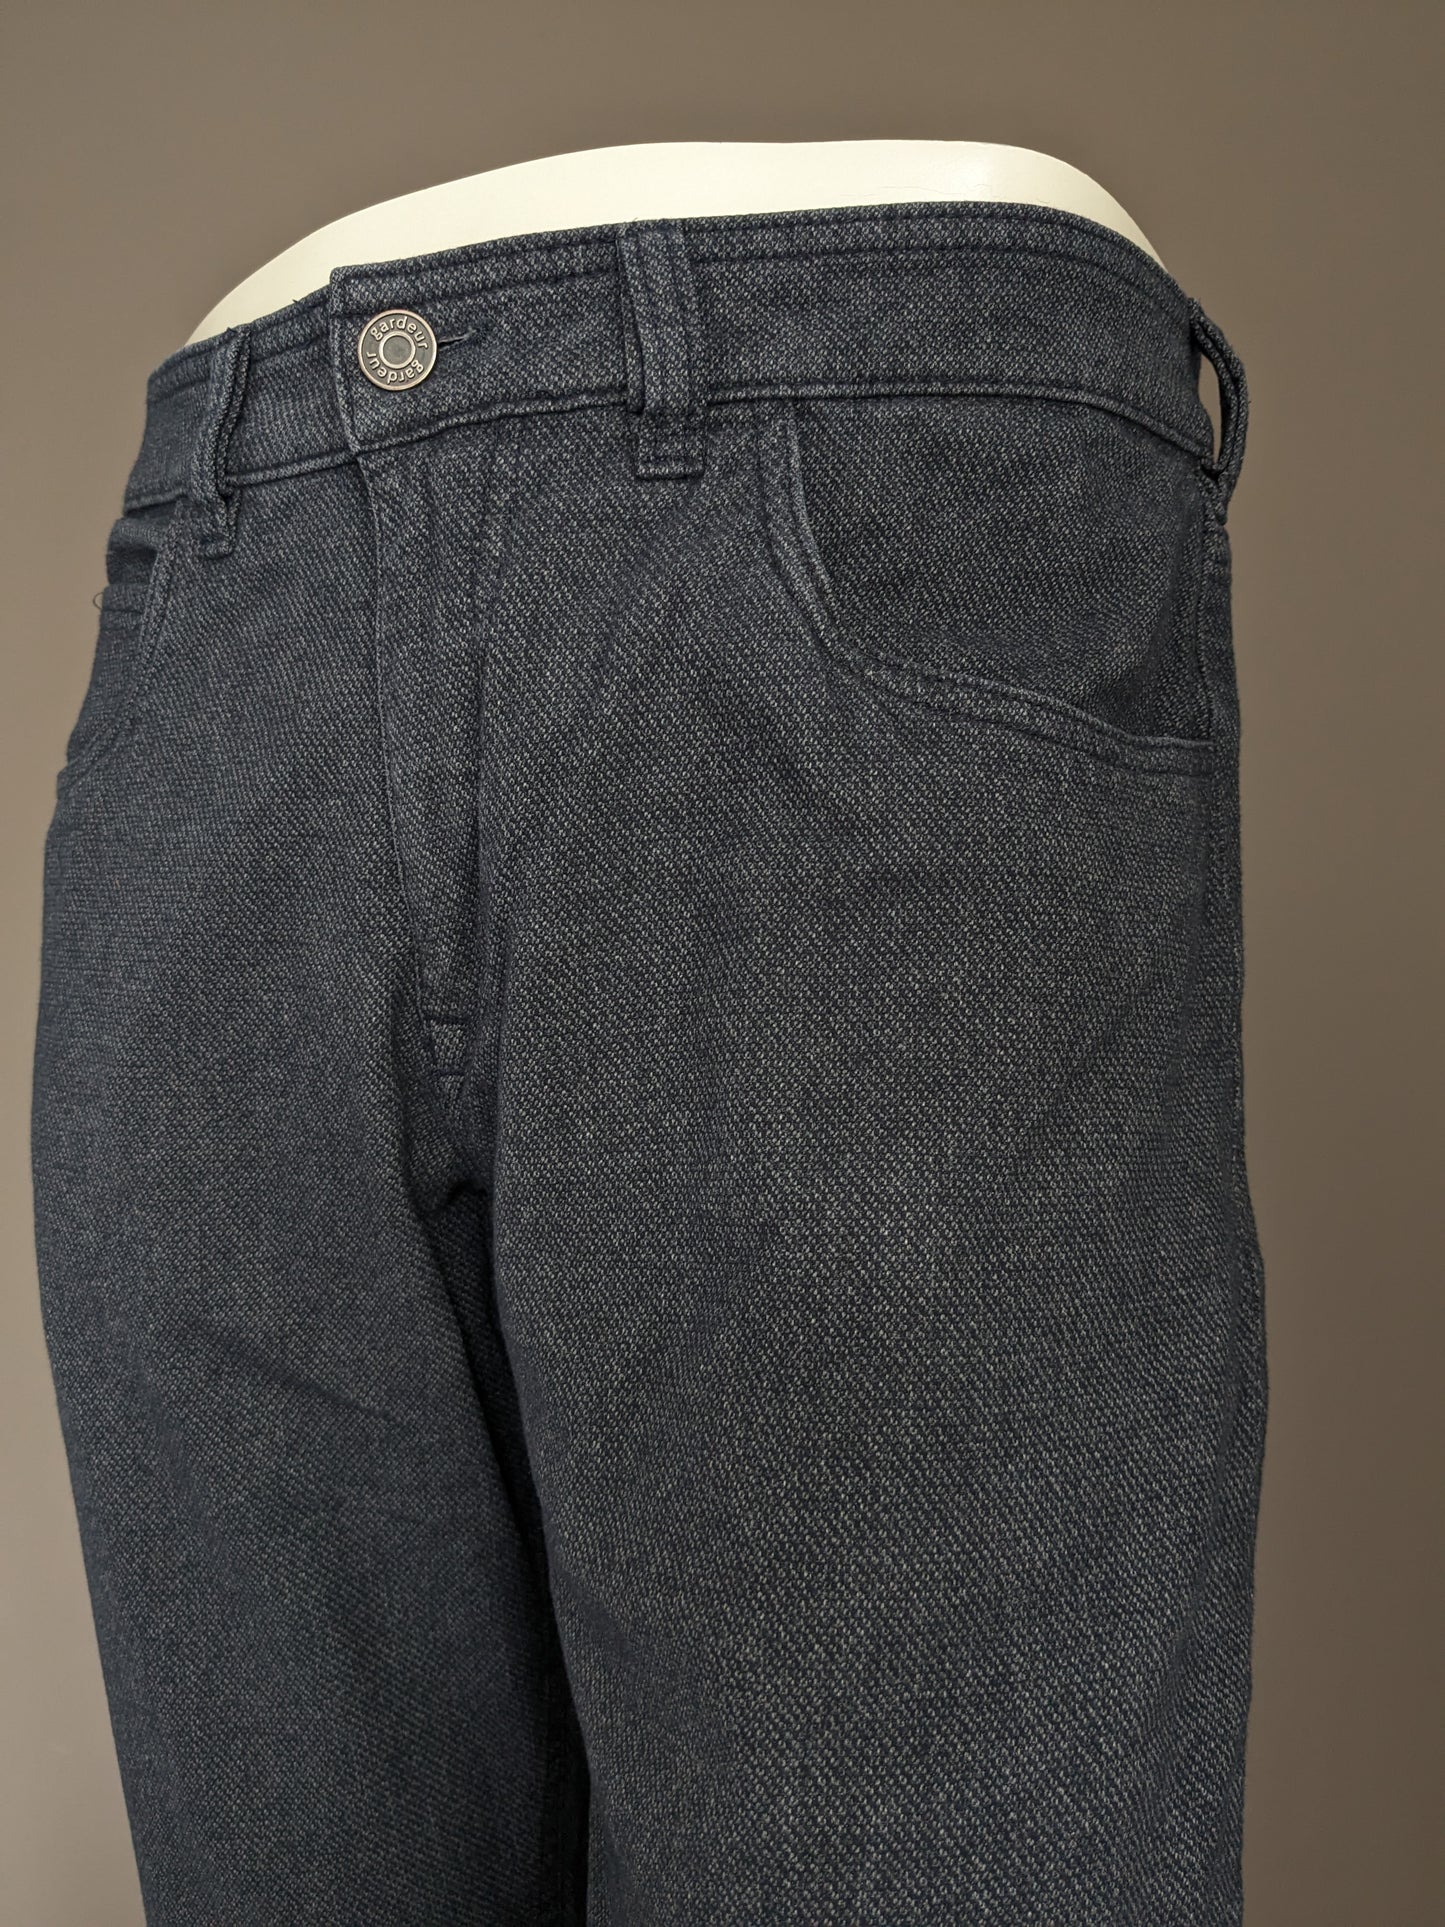 Pantalones / pantalones de gardeur. Gris azul mezclado. Fit moderno. Tamaño 34 - L34.